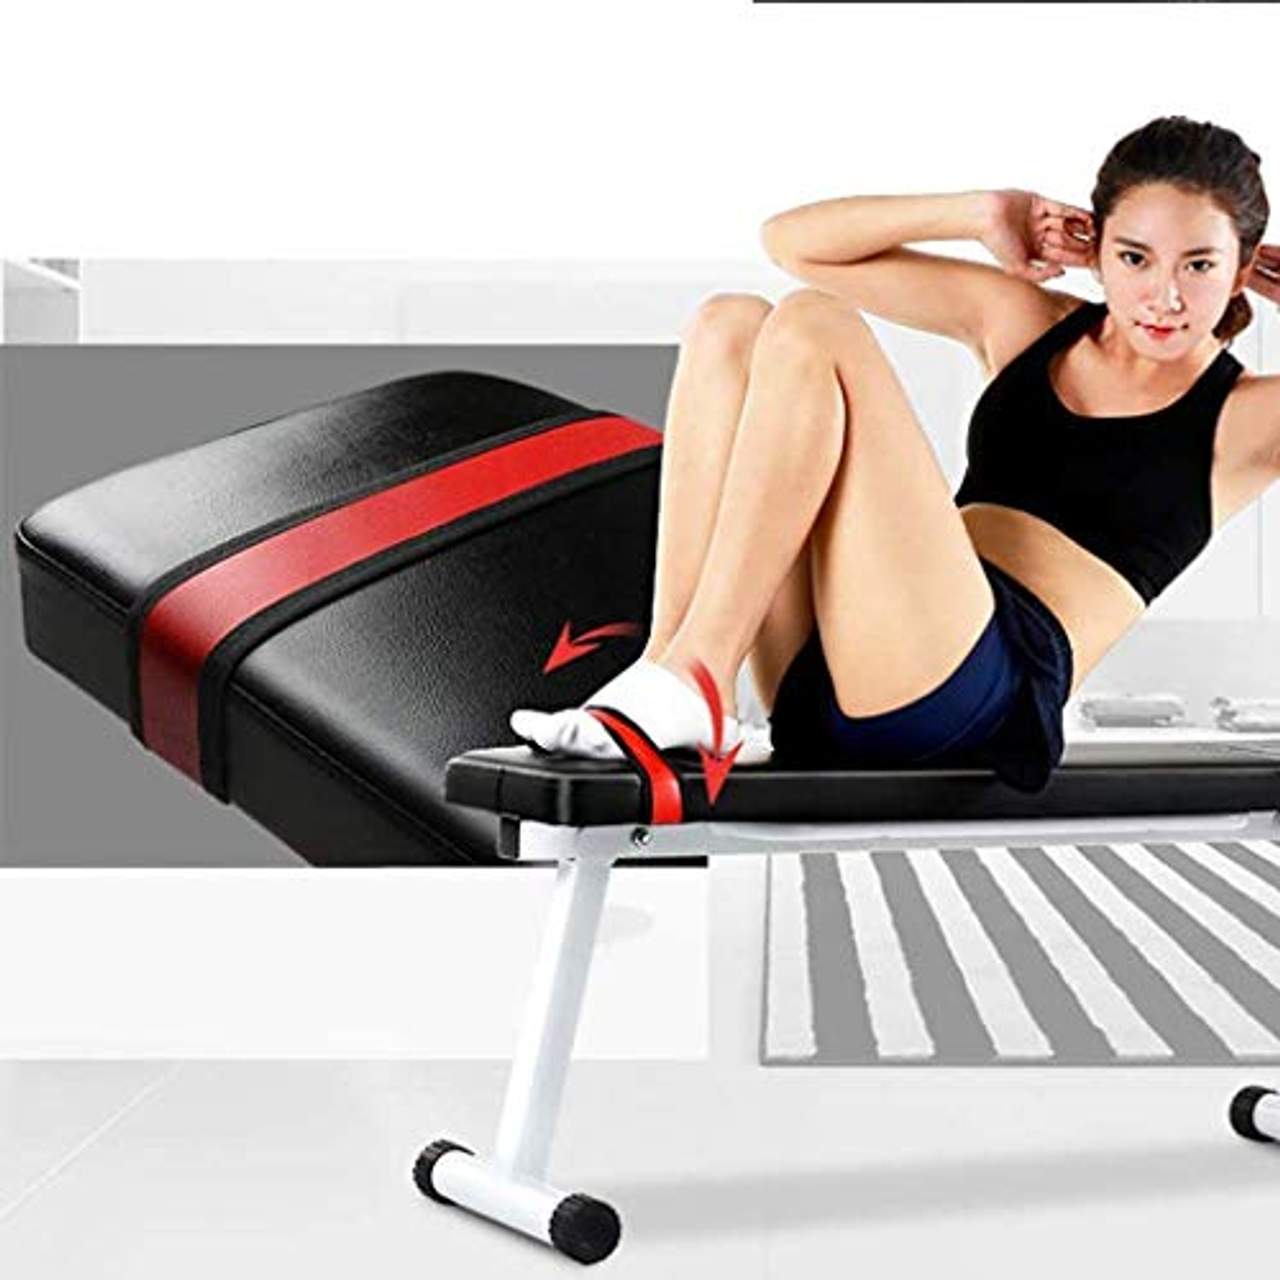 LFJY Supine Bench Startseite Multifunktionale Fitness Equipment